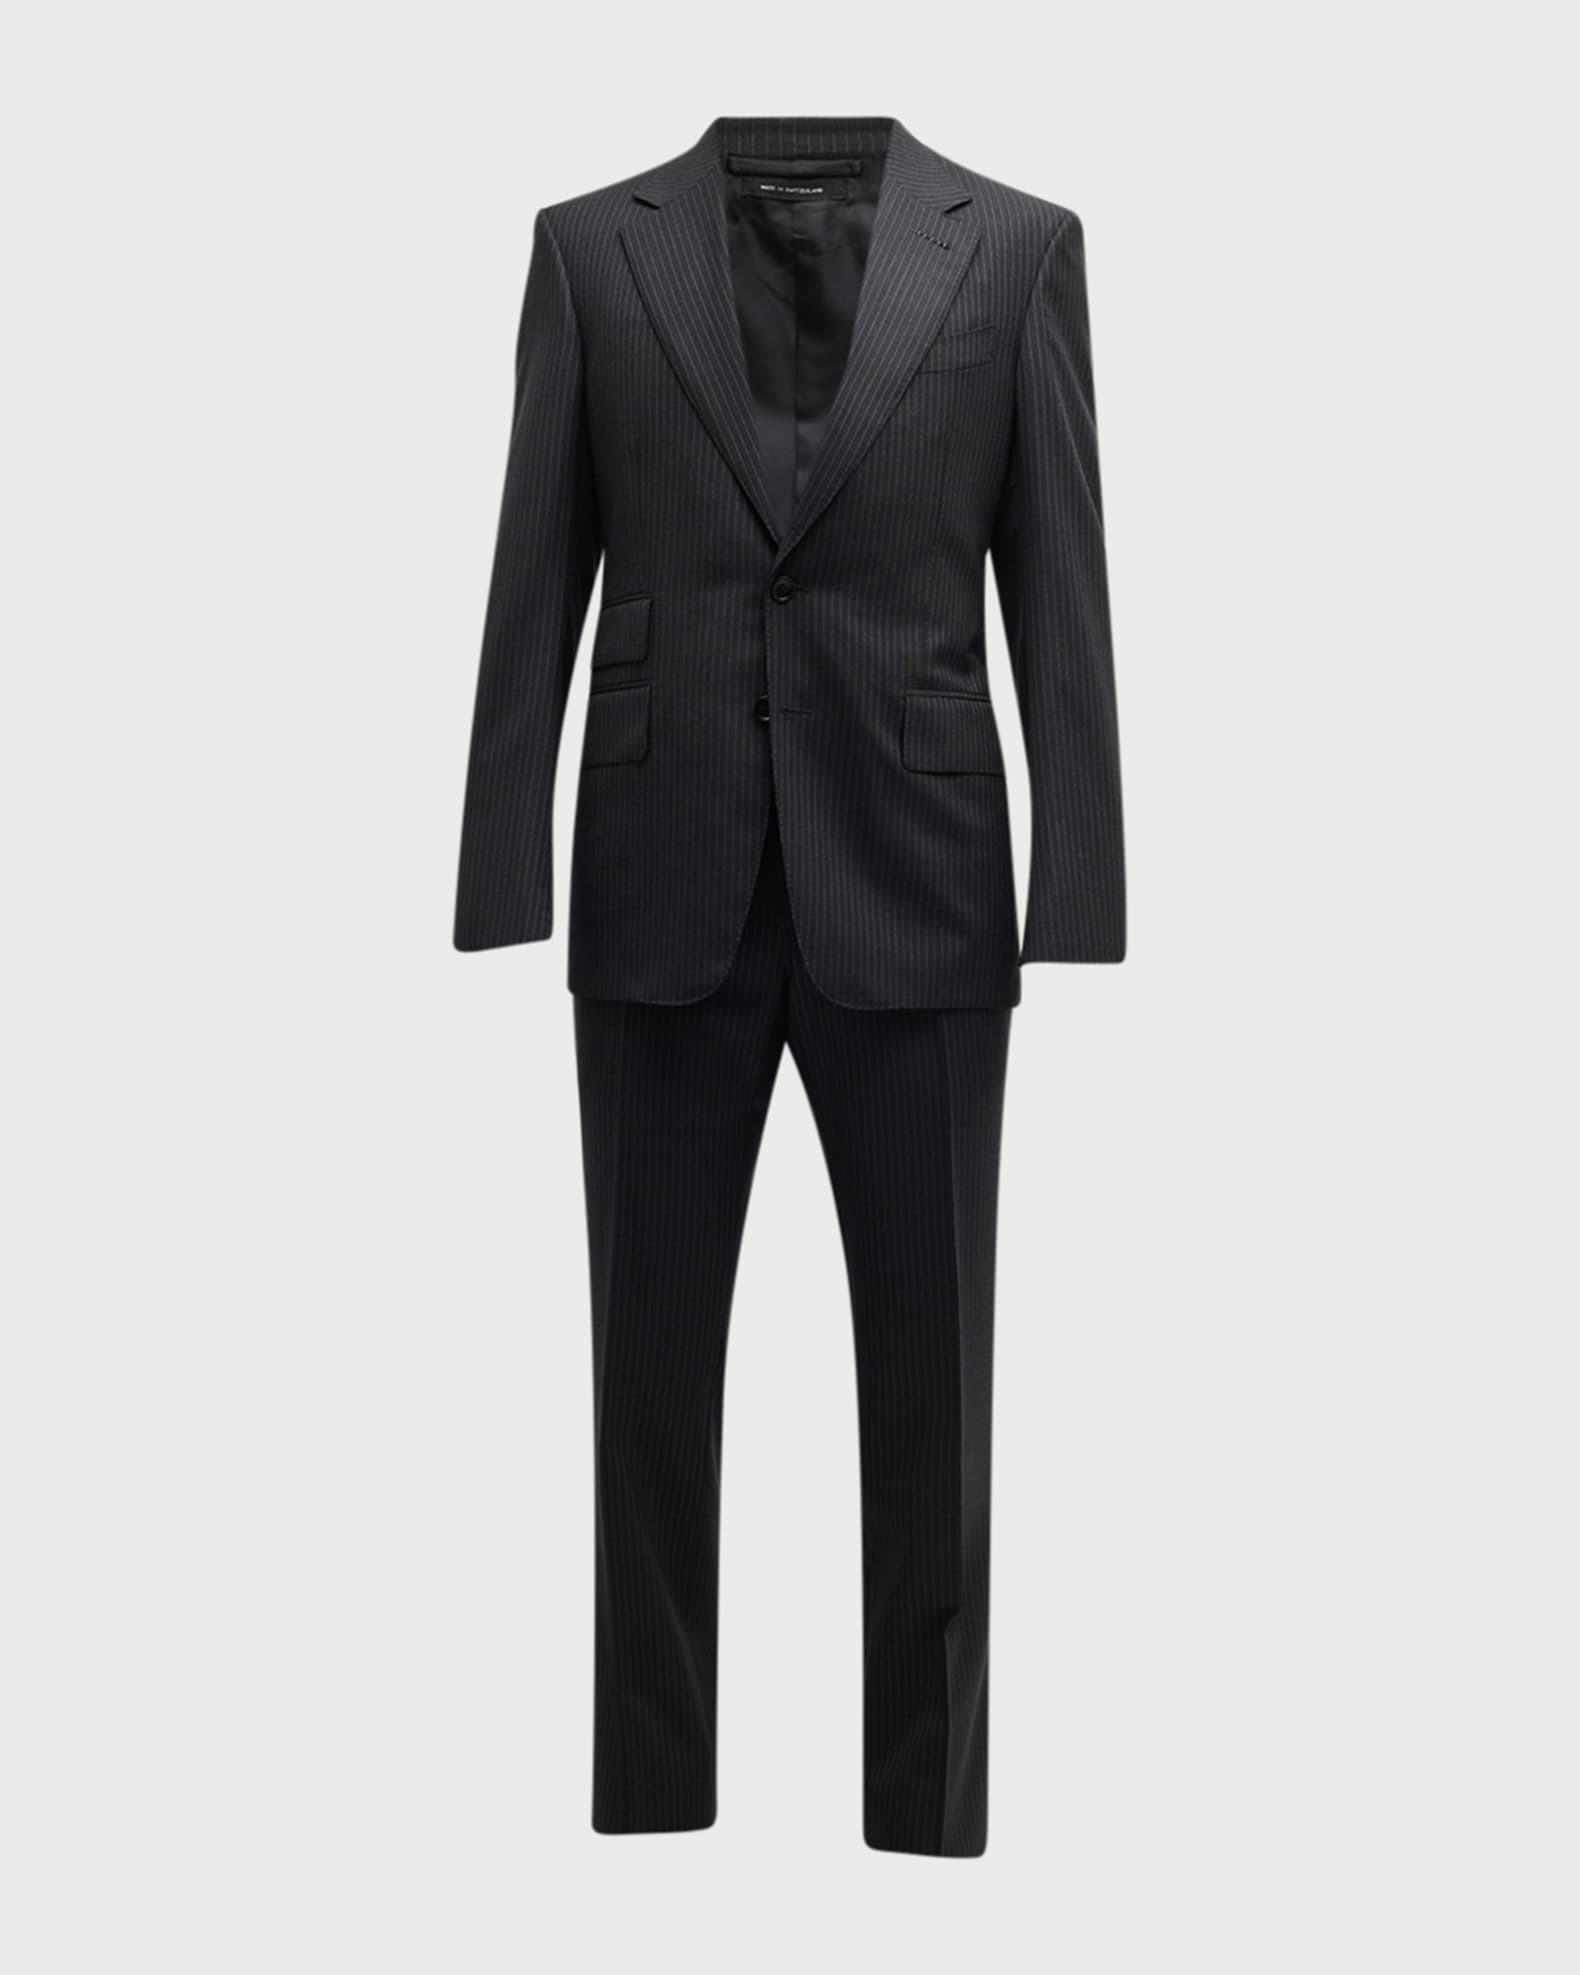 TOM FORD Men's Shelton Pinstripe Suit | Neiman Marcus